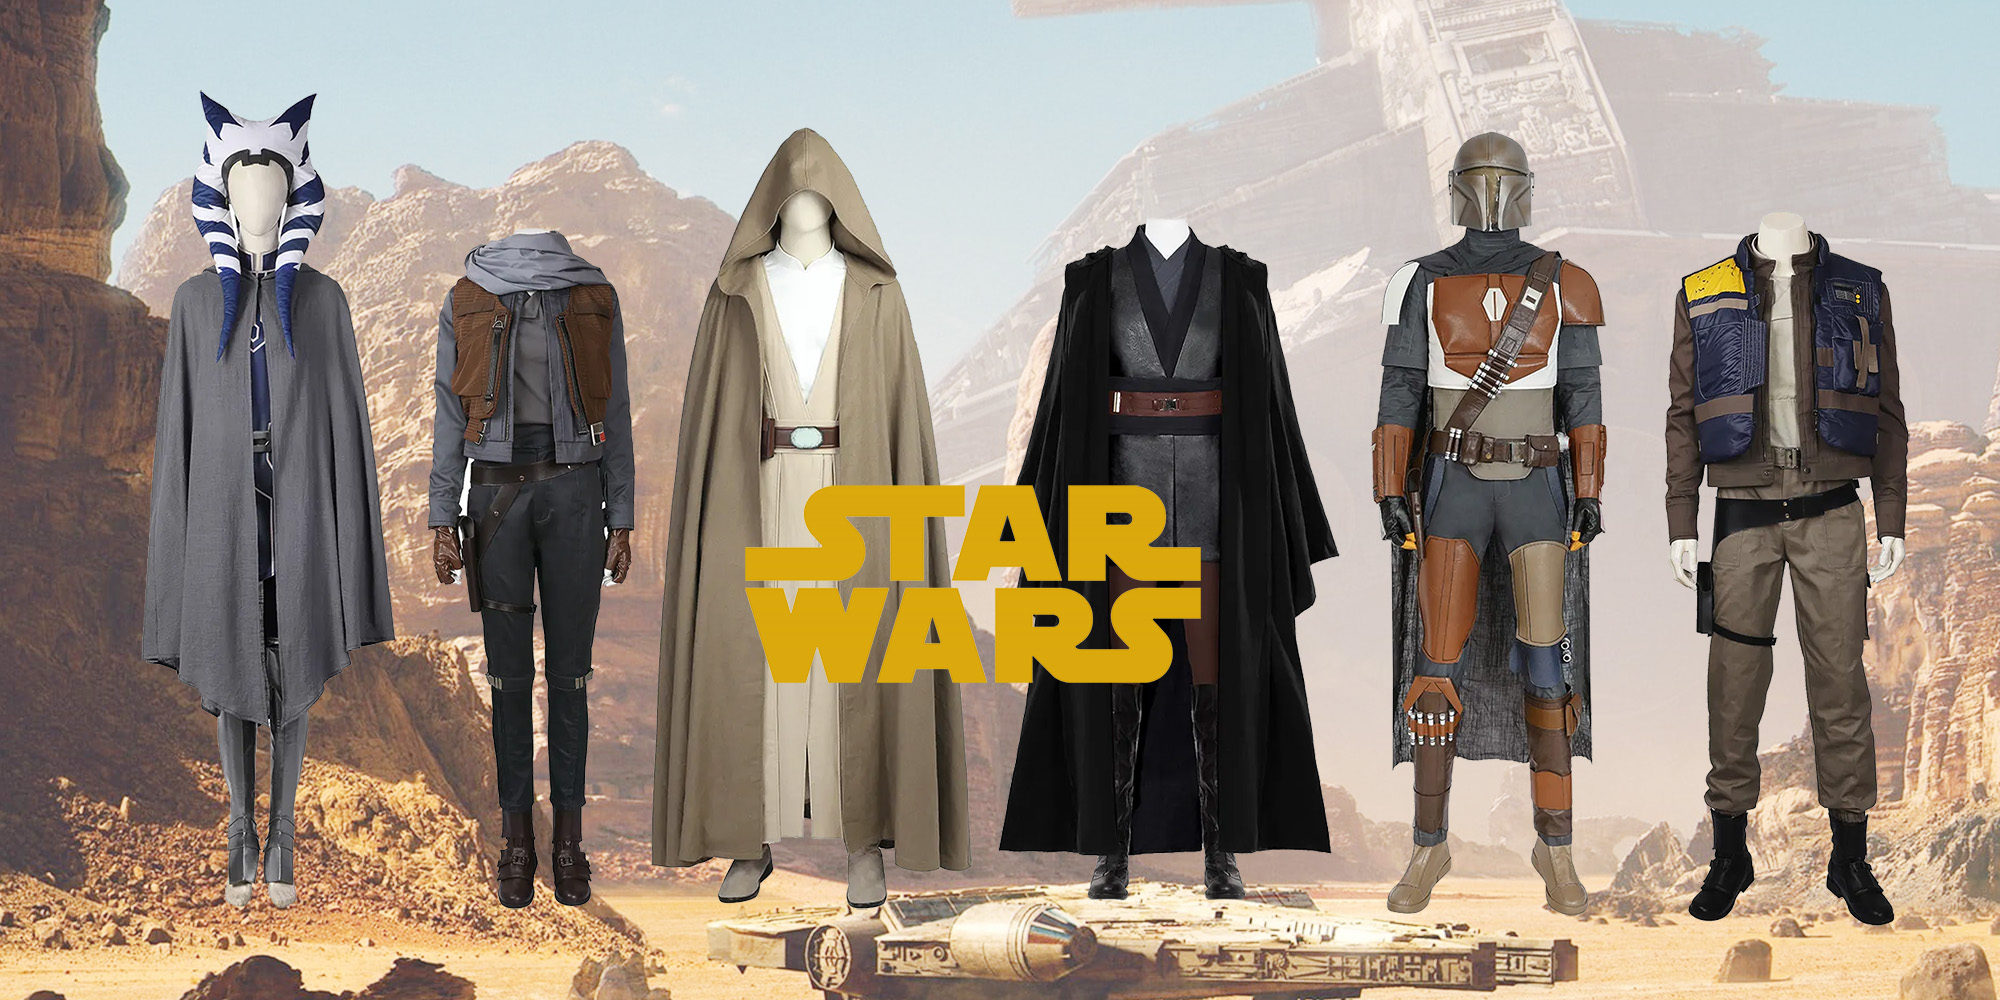 Star Wars Costume, Anakin Skywalker Cosplay